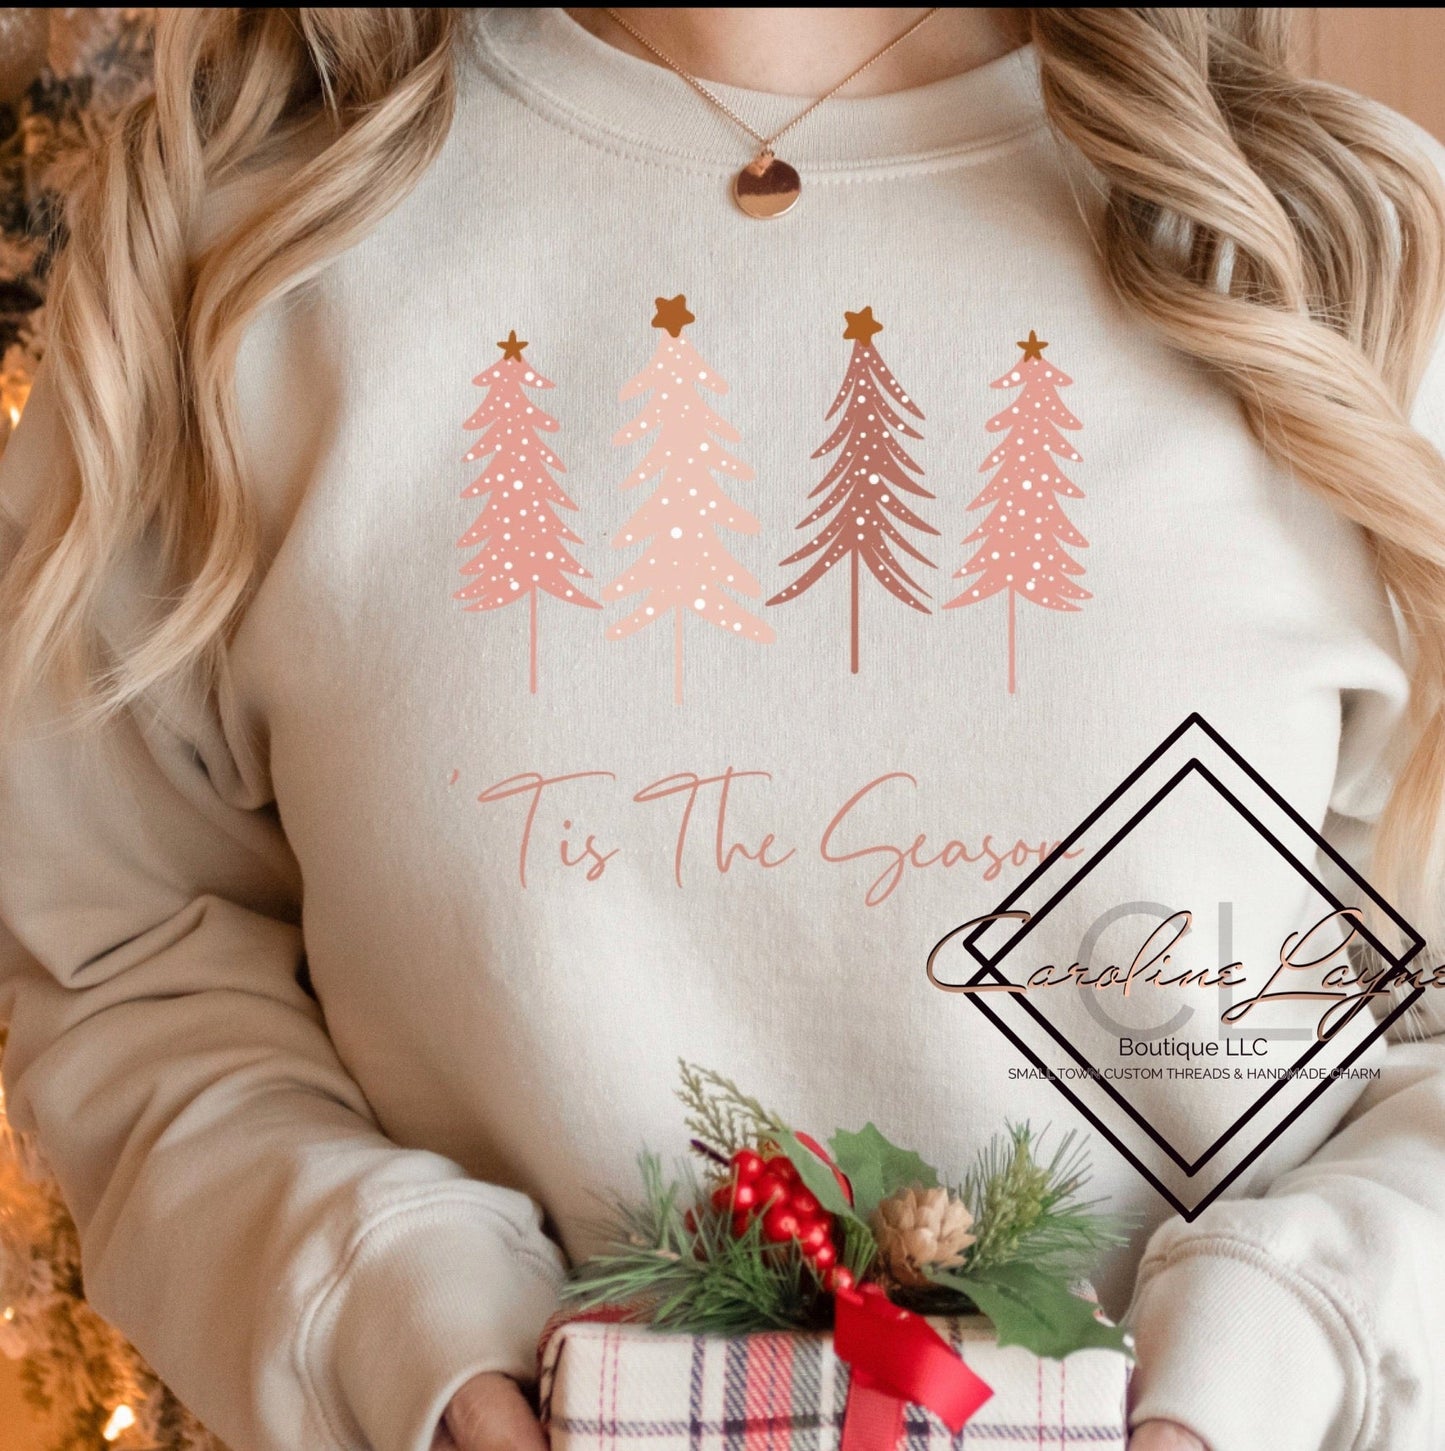 Tis the season Christmas trees Sweatshirt - Caroline Layne Boutique LLC